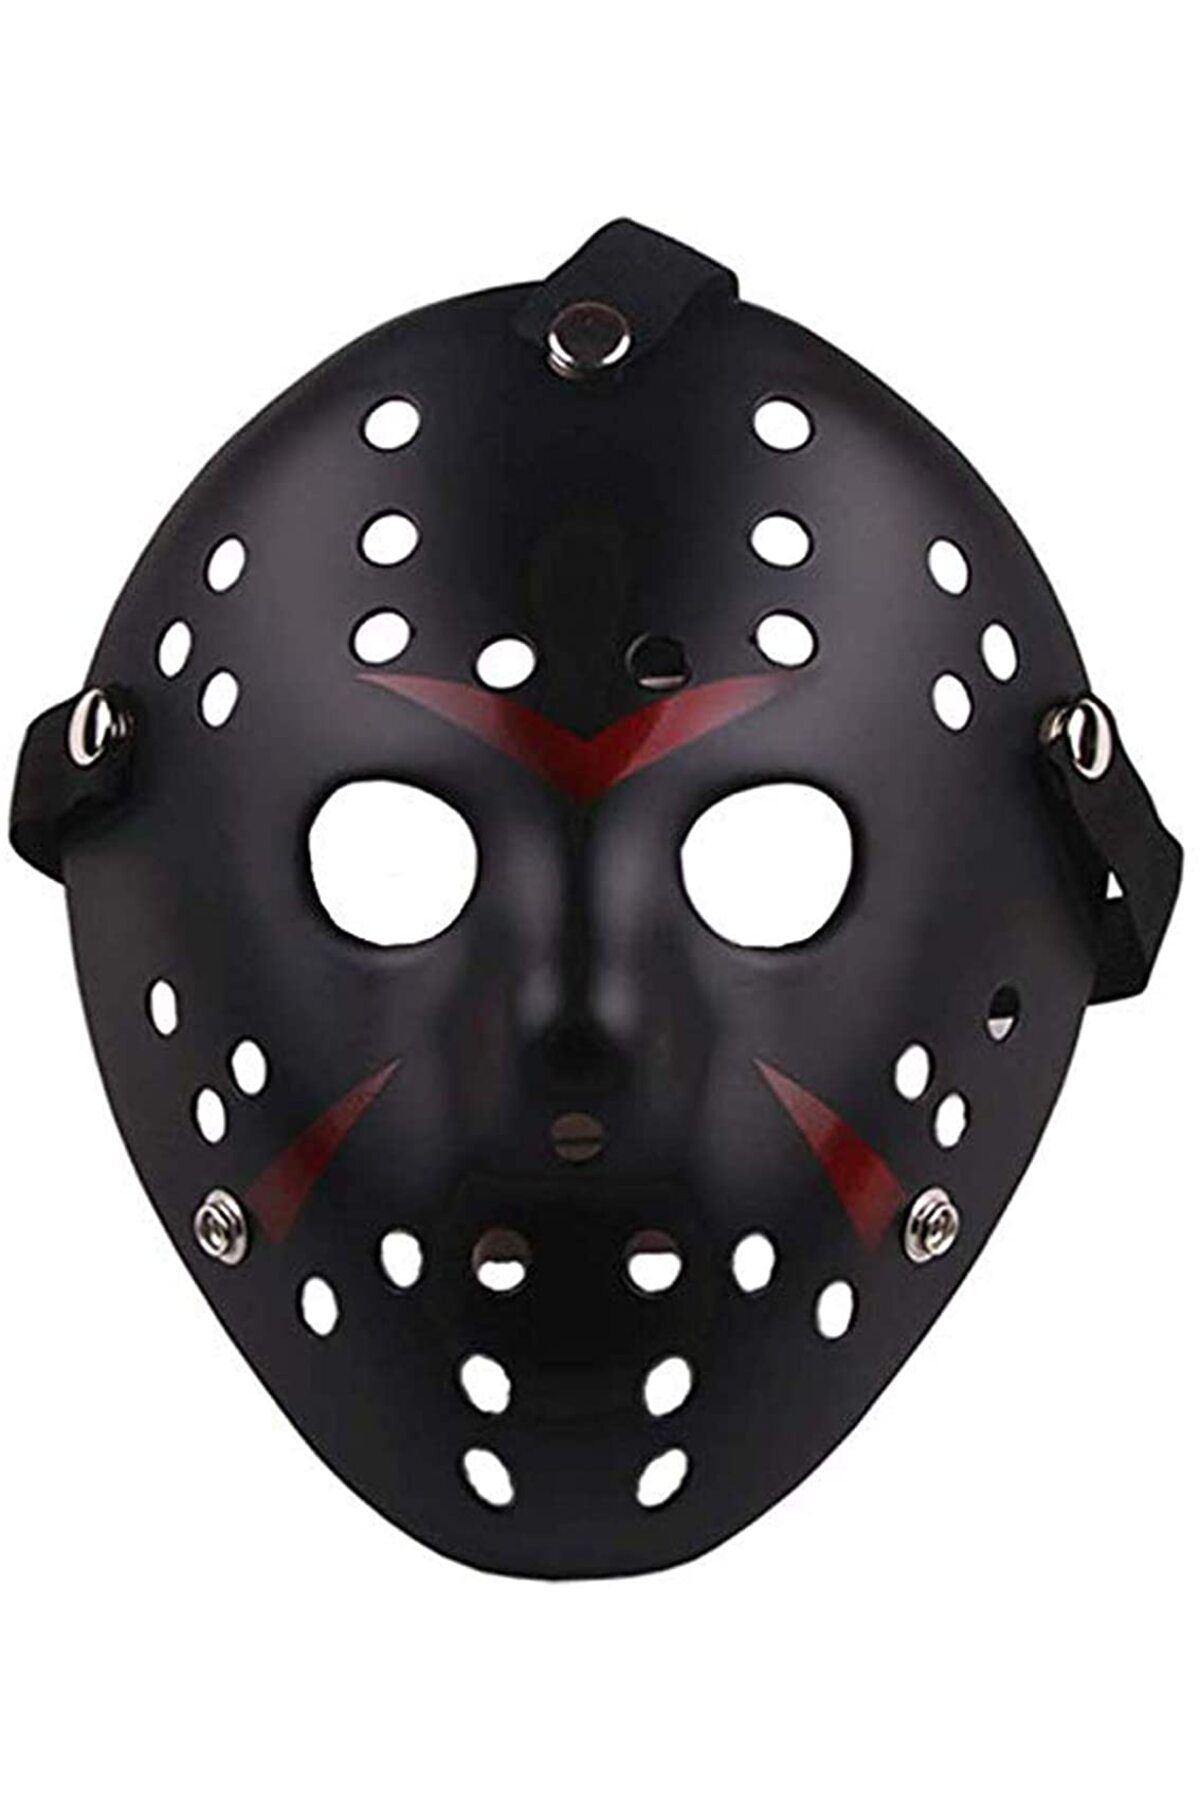 Tektonics Siyah Renk Kırmızı Çizgili Tam Yüz Hokey Jason Maskesi Hannibal Maskesi